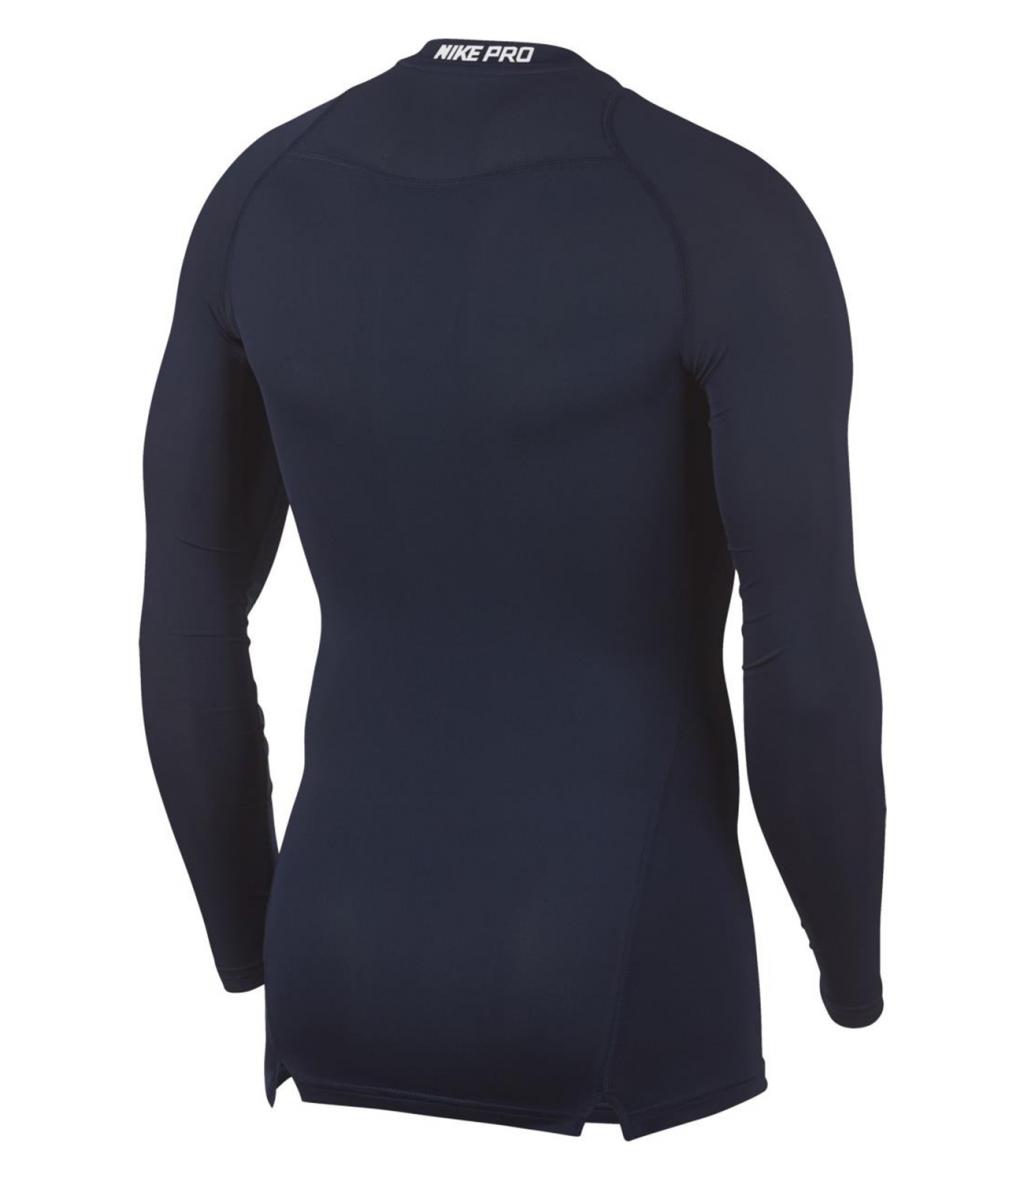 Nike Pro Top Compression Long Sleeves Jersey/термоактивное белье длинный рукав